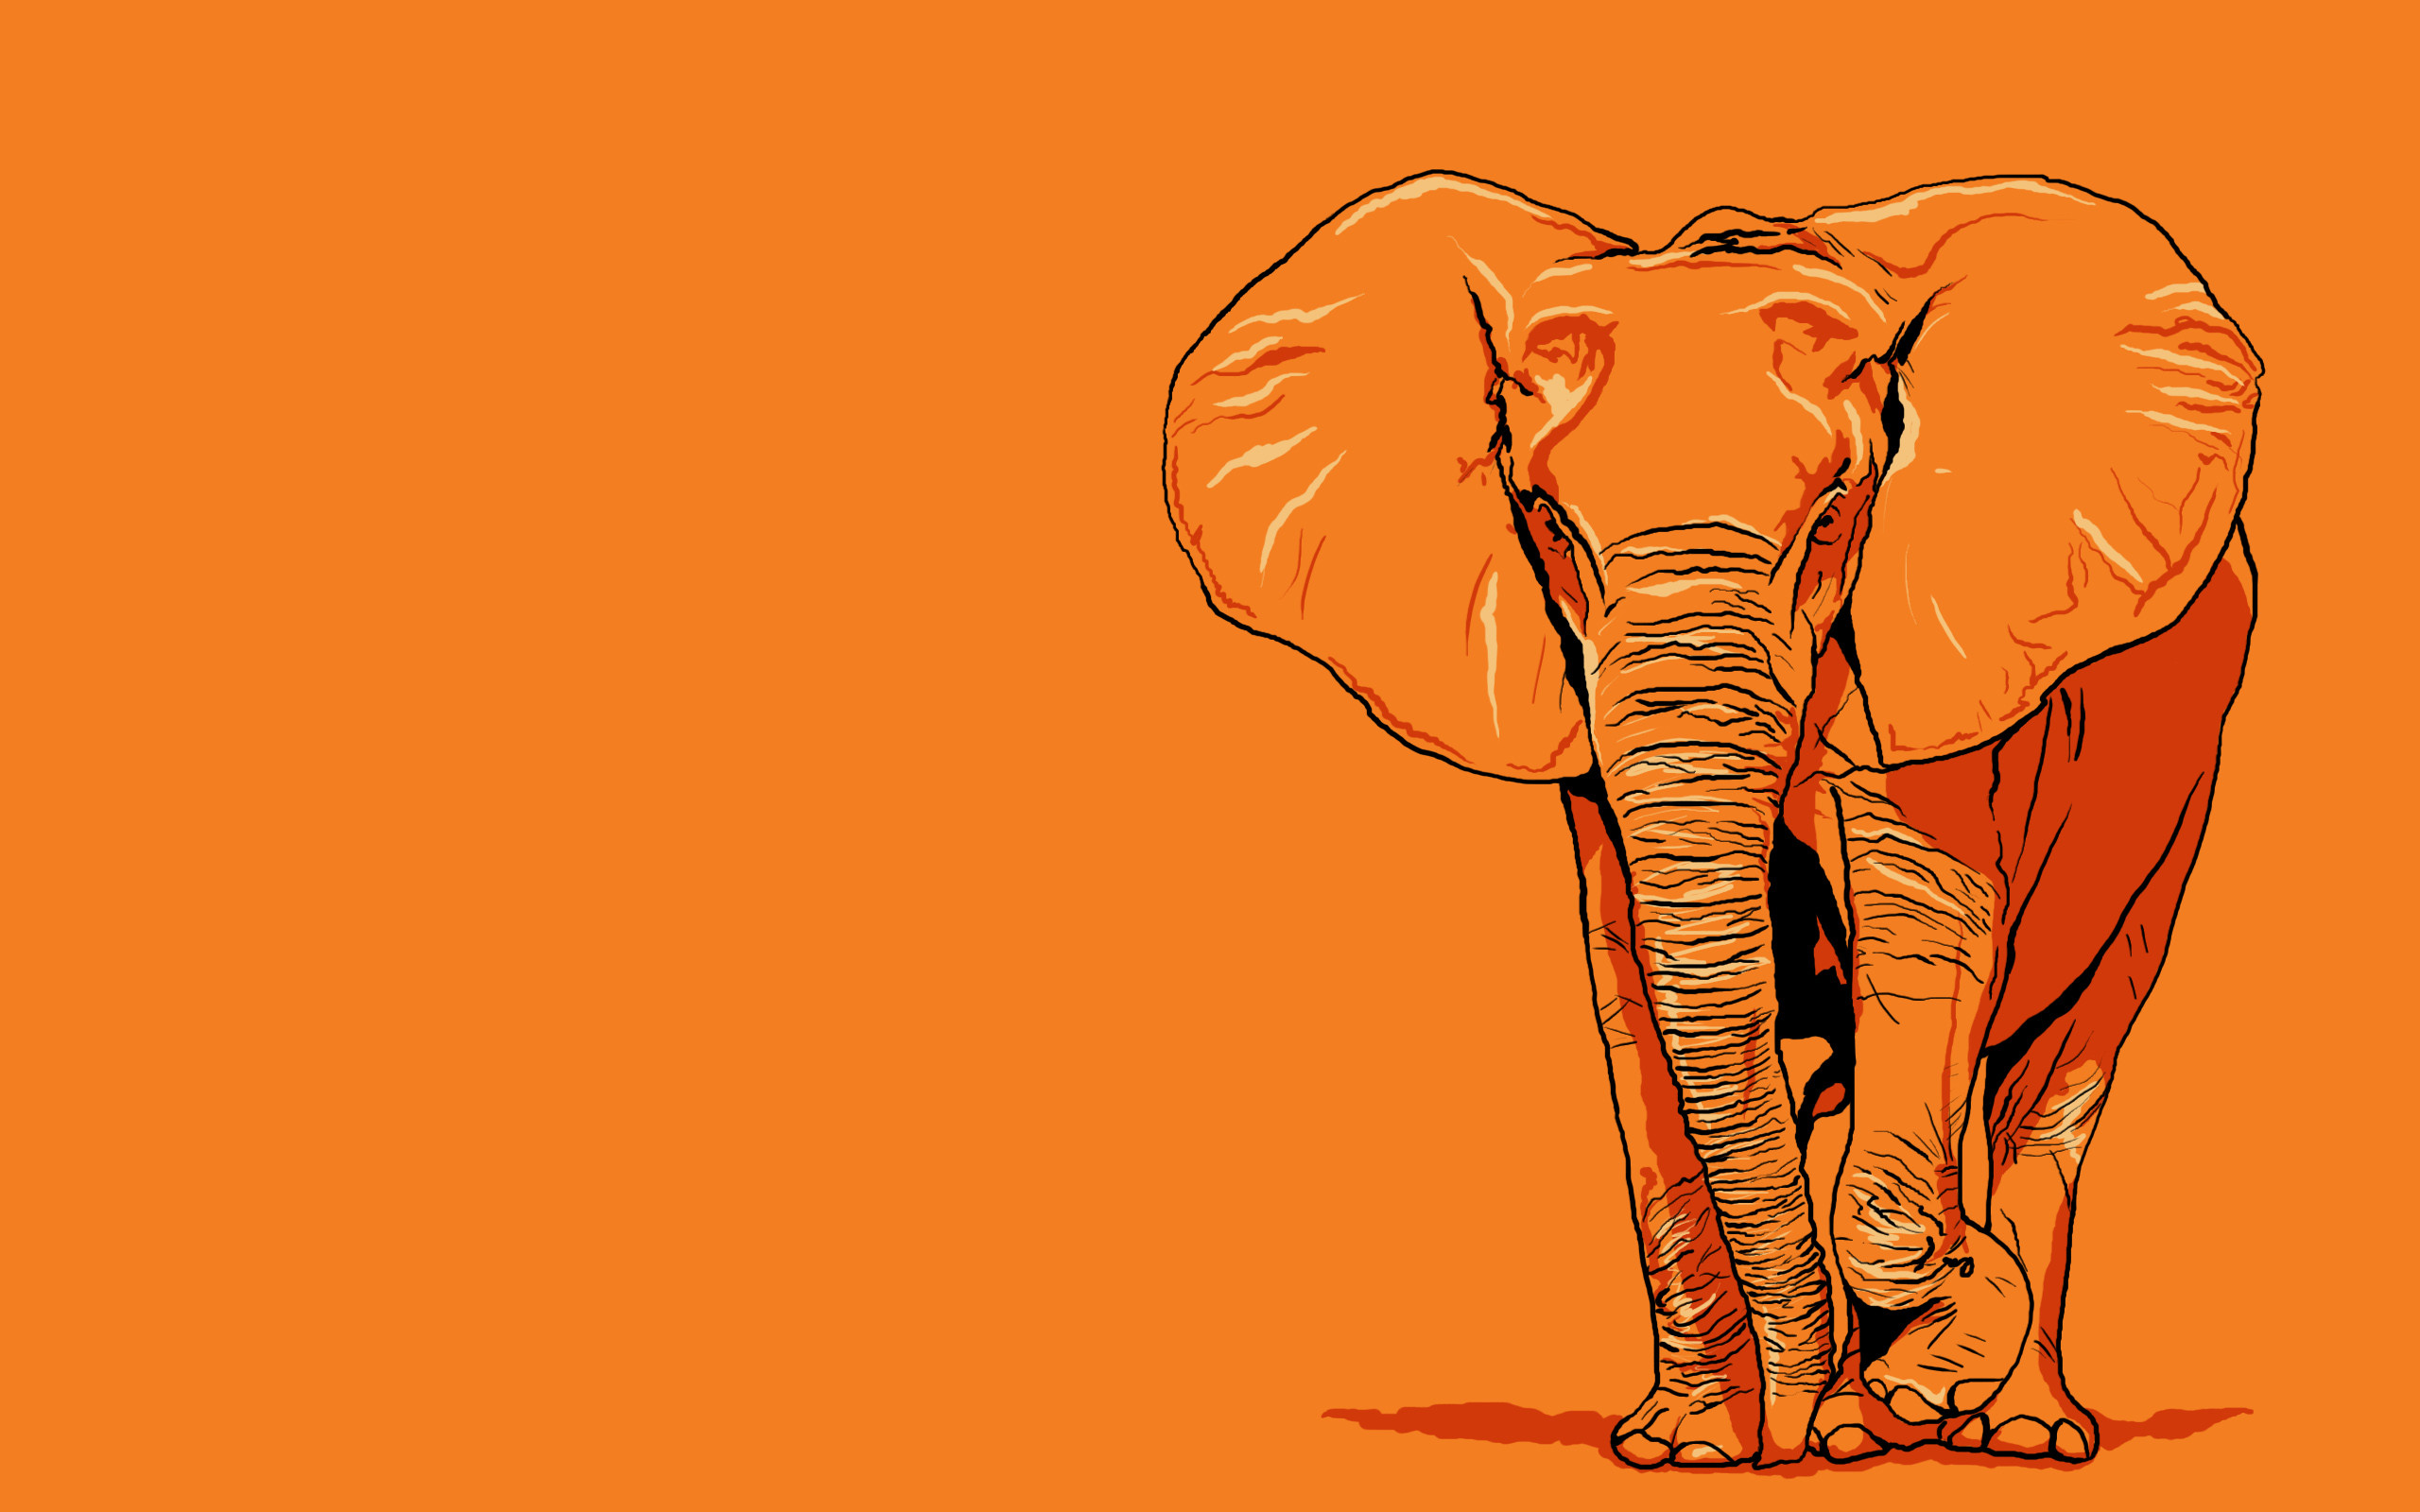 2560x1600 Chameleon elephants High Quality and Resolution desktop wallpaper ...  Elephant BackgroundElephant WallpaperOrange ...